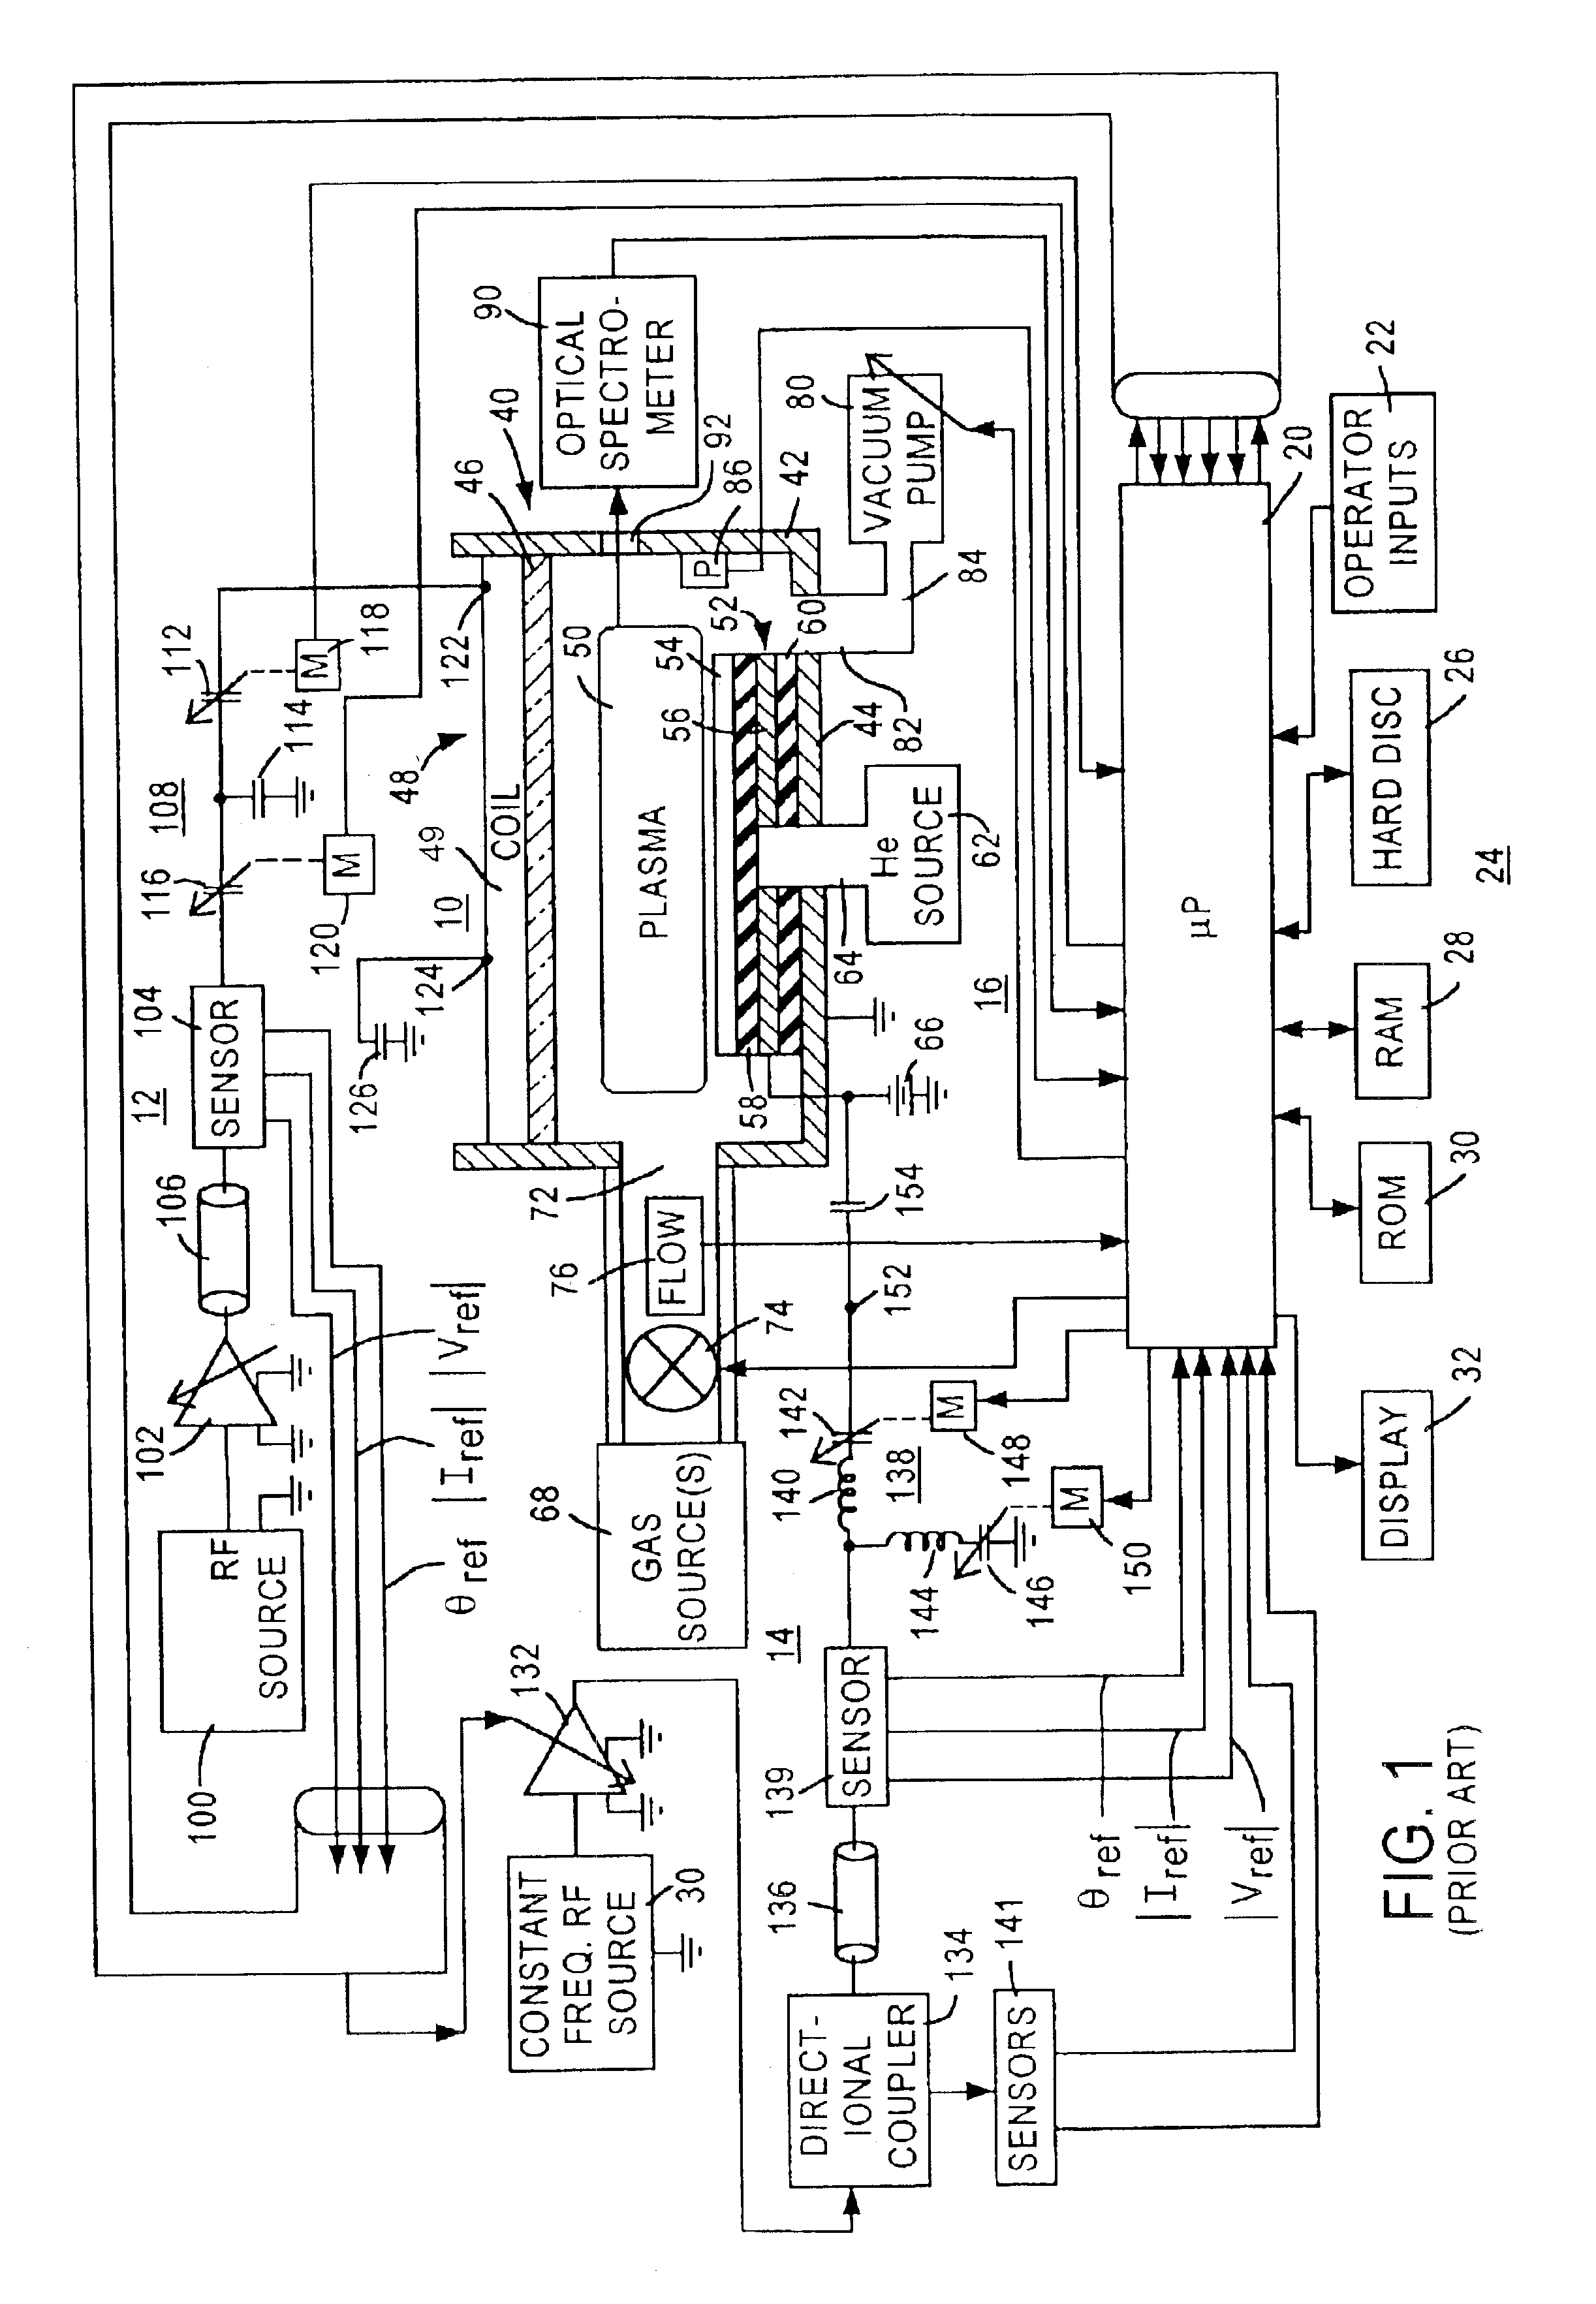 Plasma processor apparatus and method, and antenna